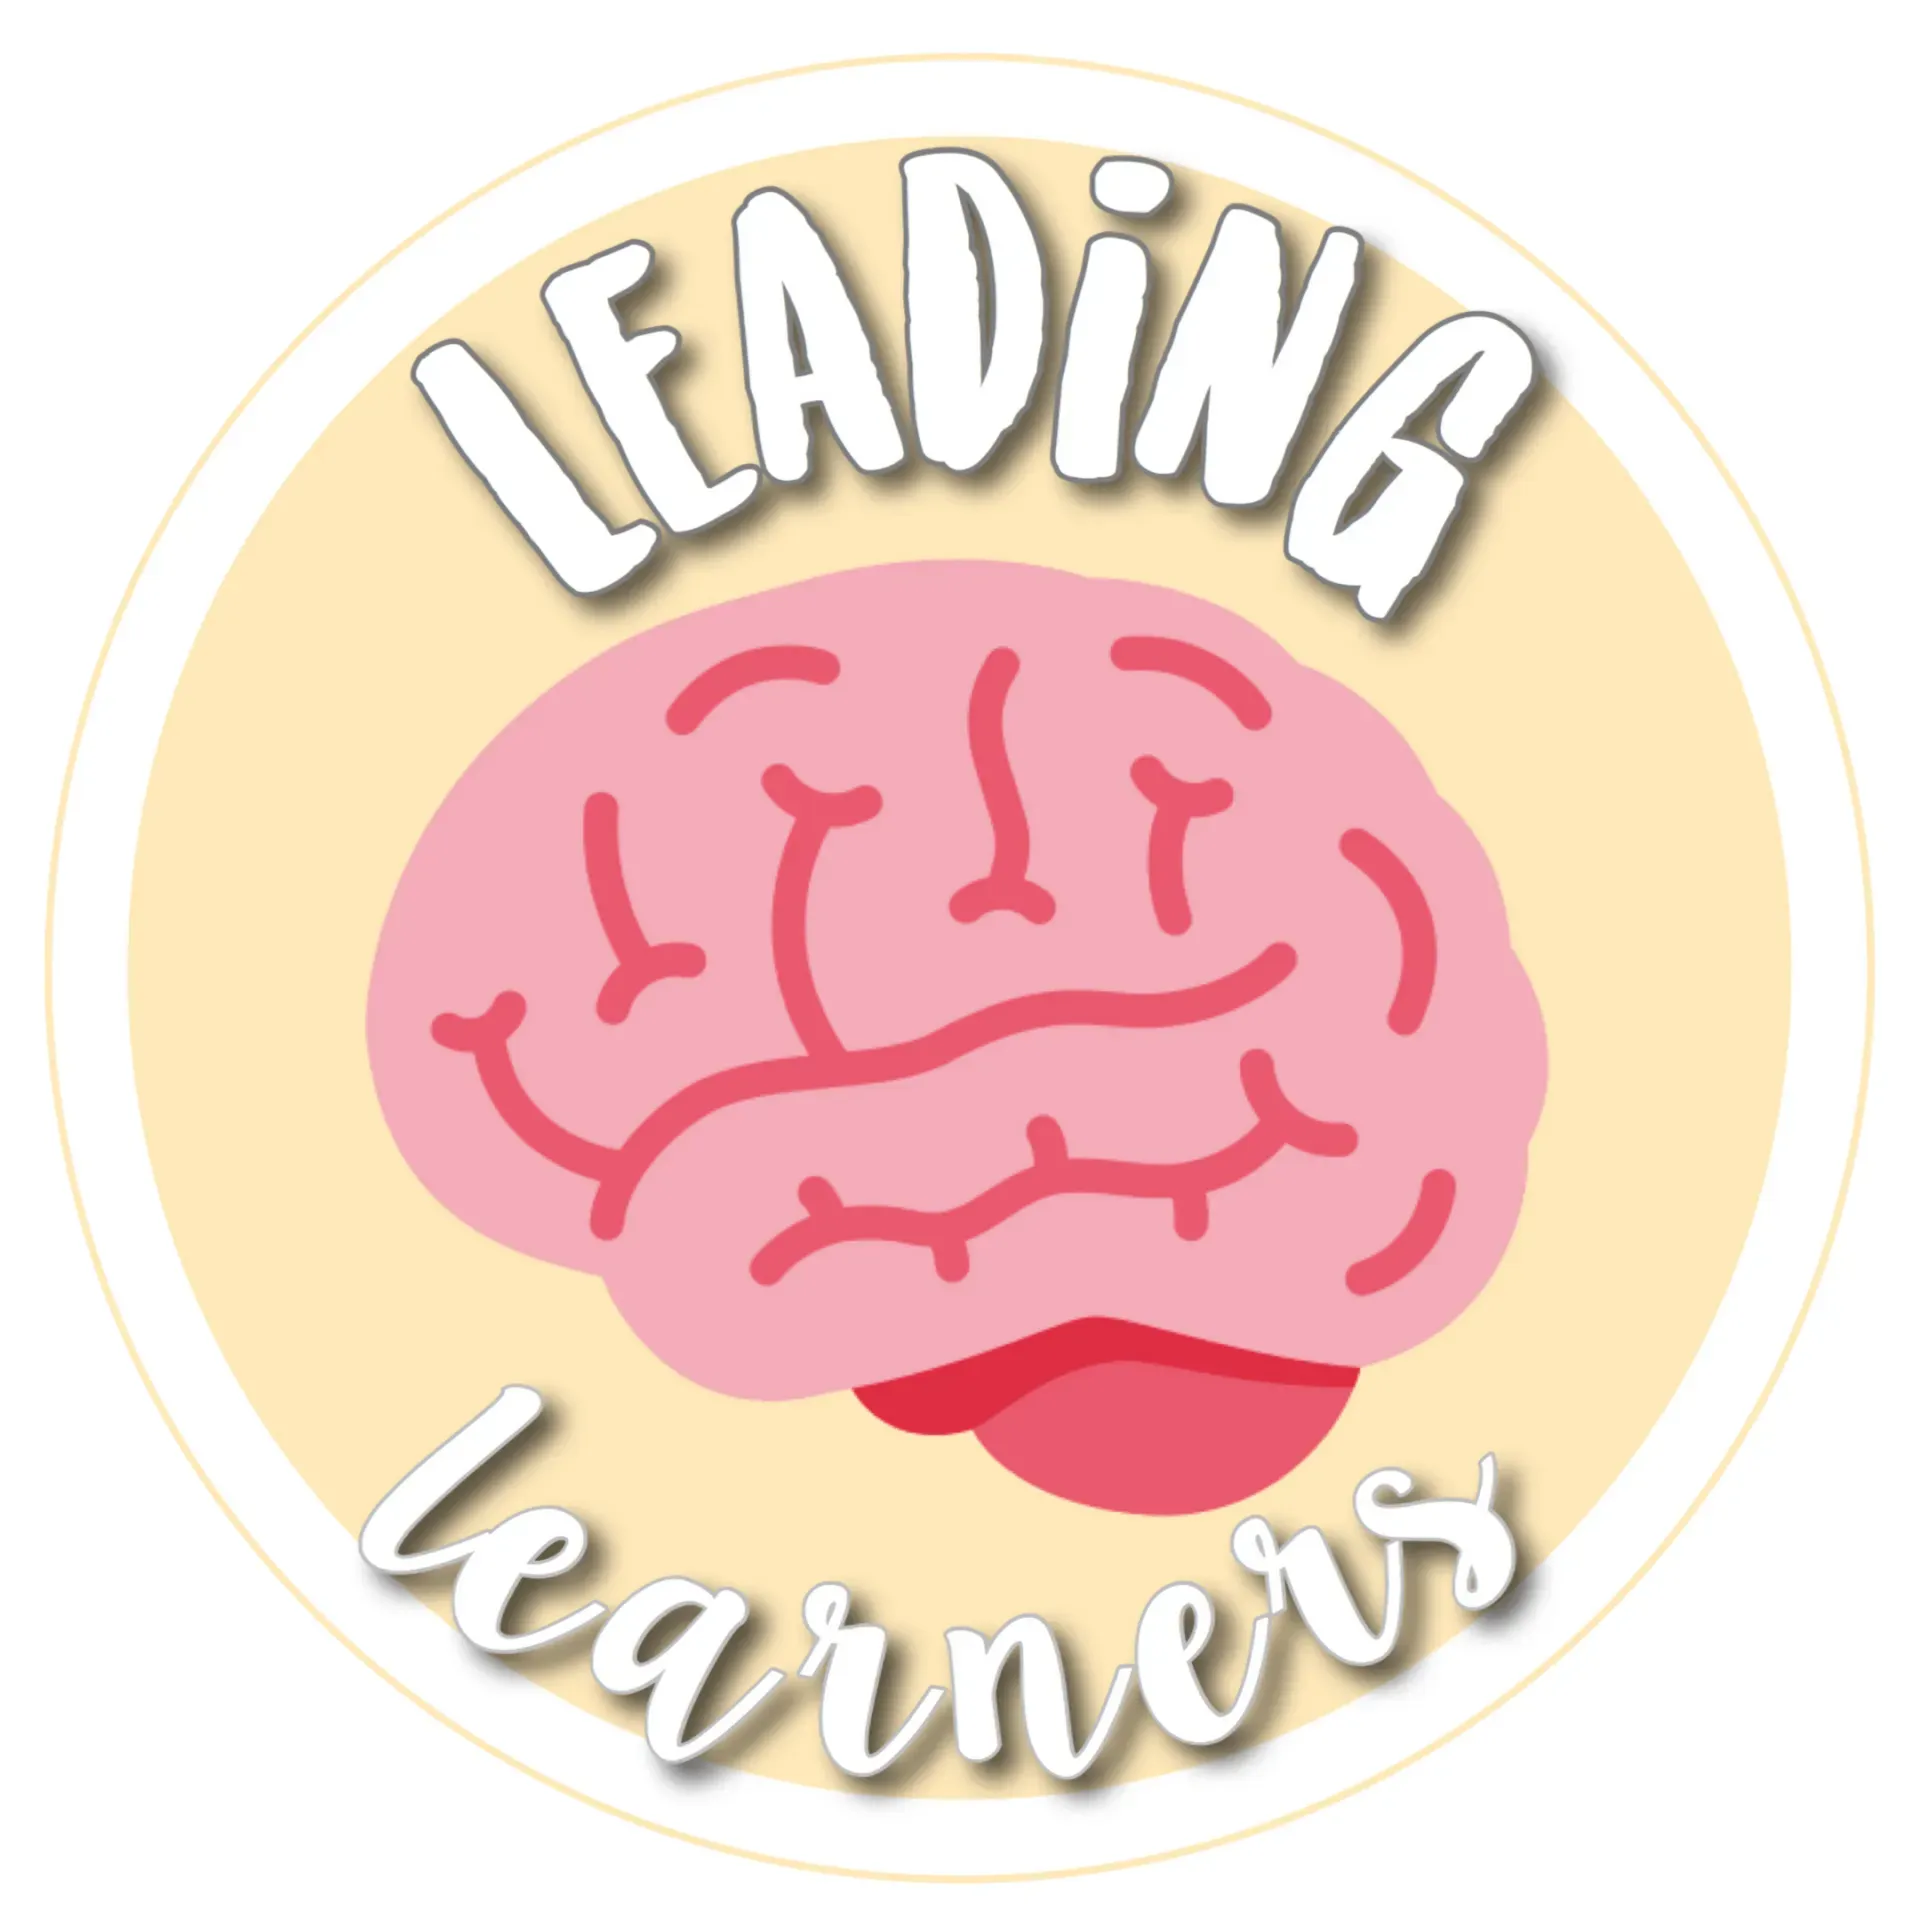 Leading Learners